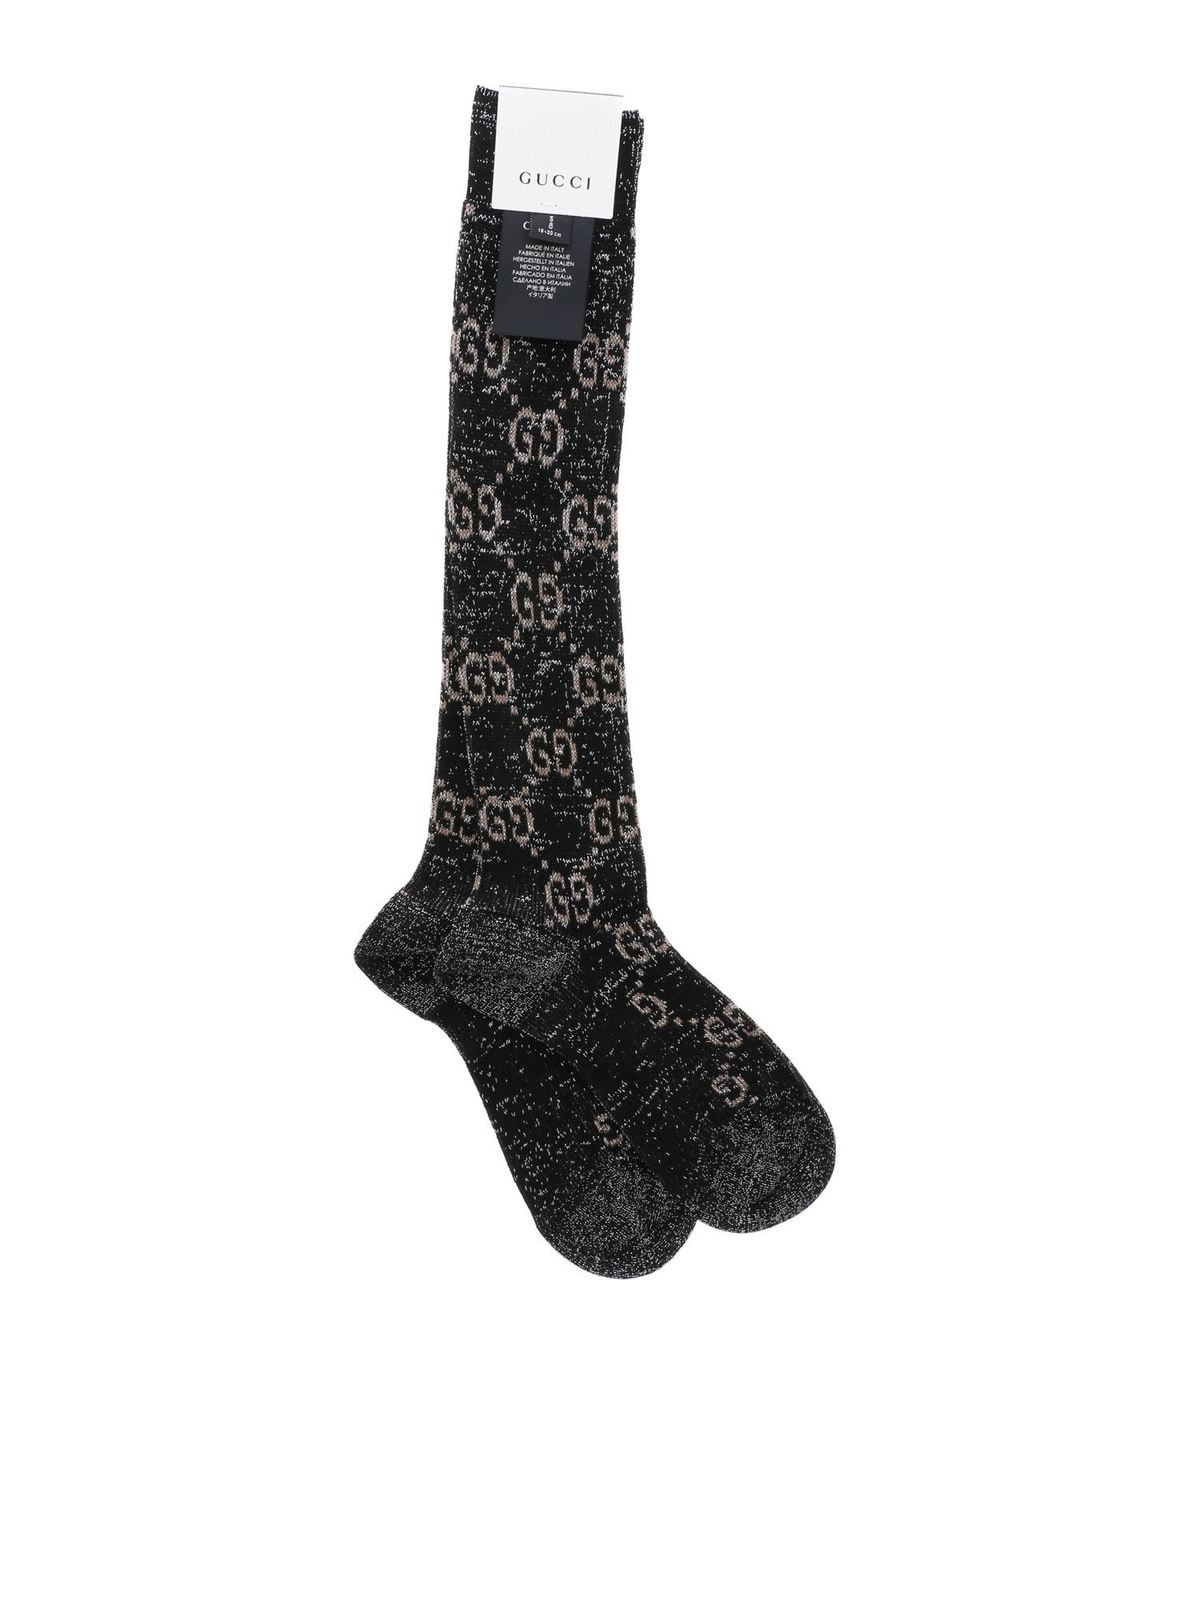 Gucci GG black lamé socks 4765253G1991063